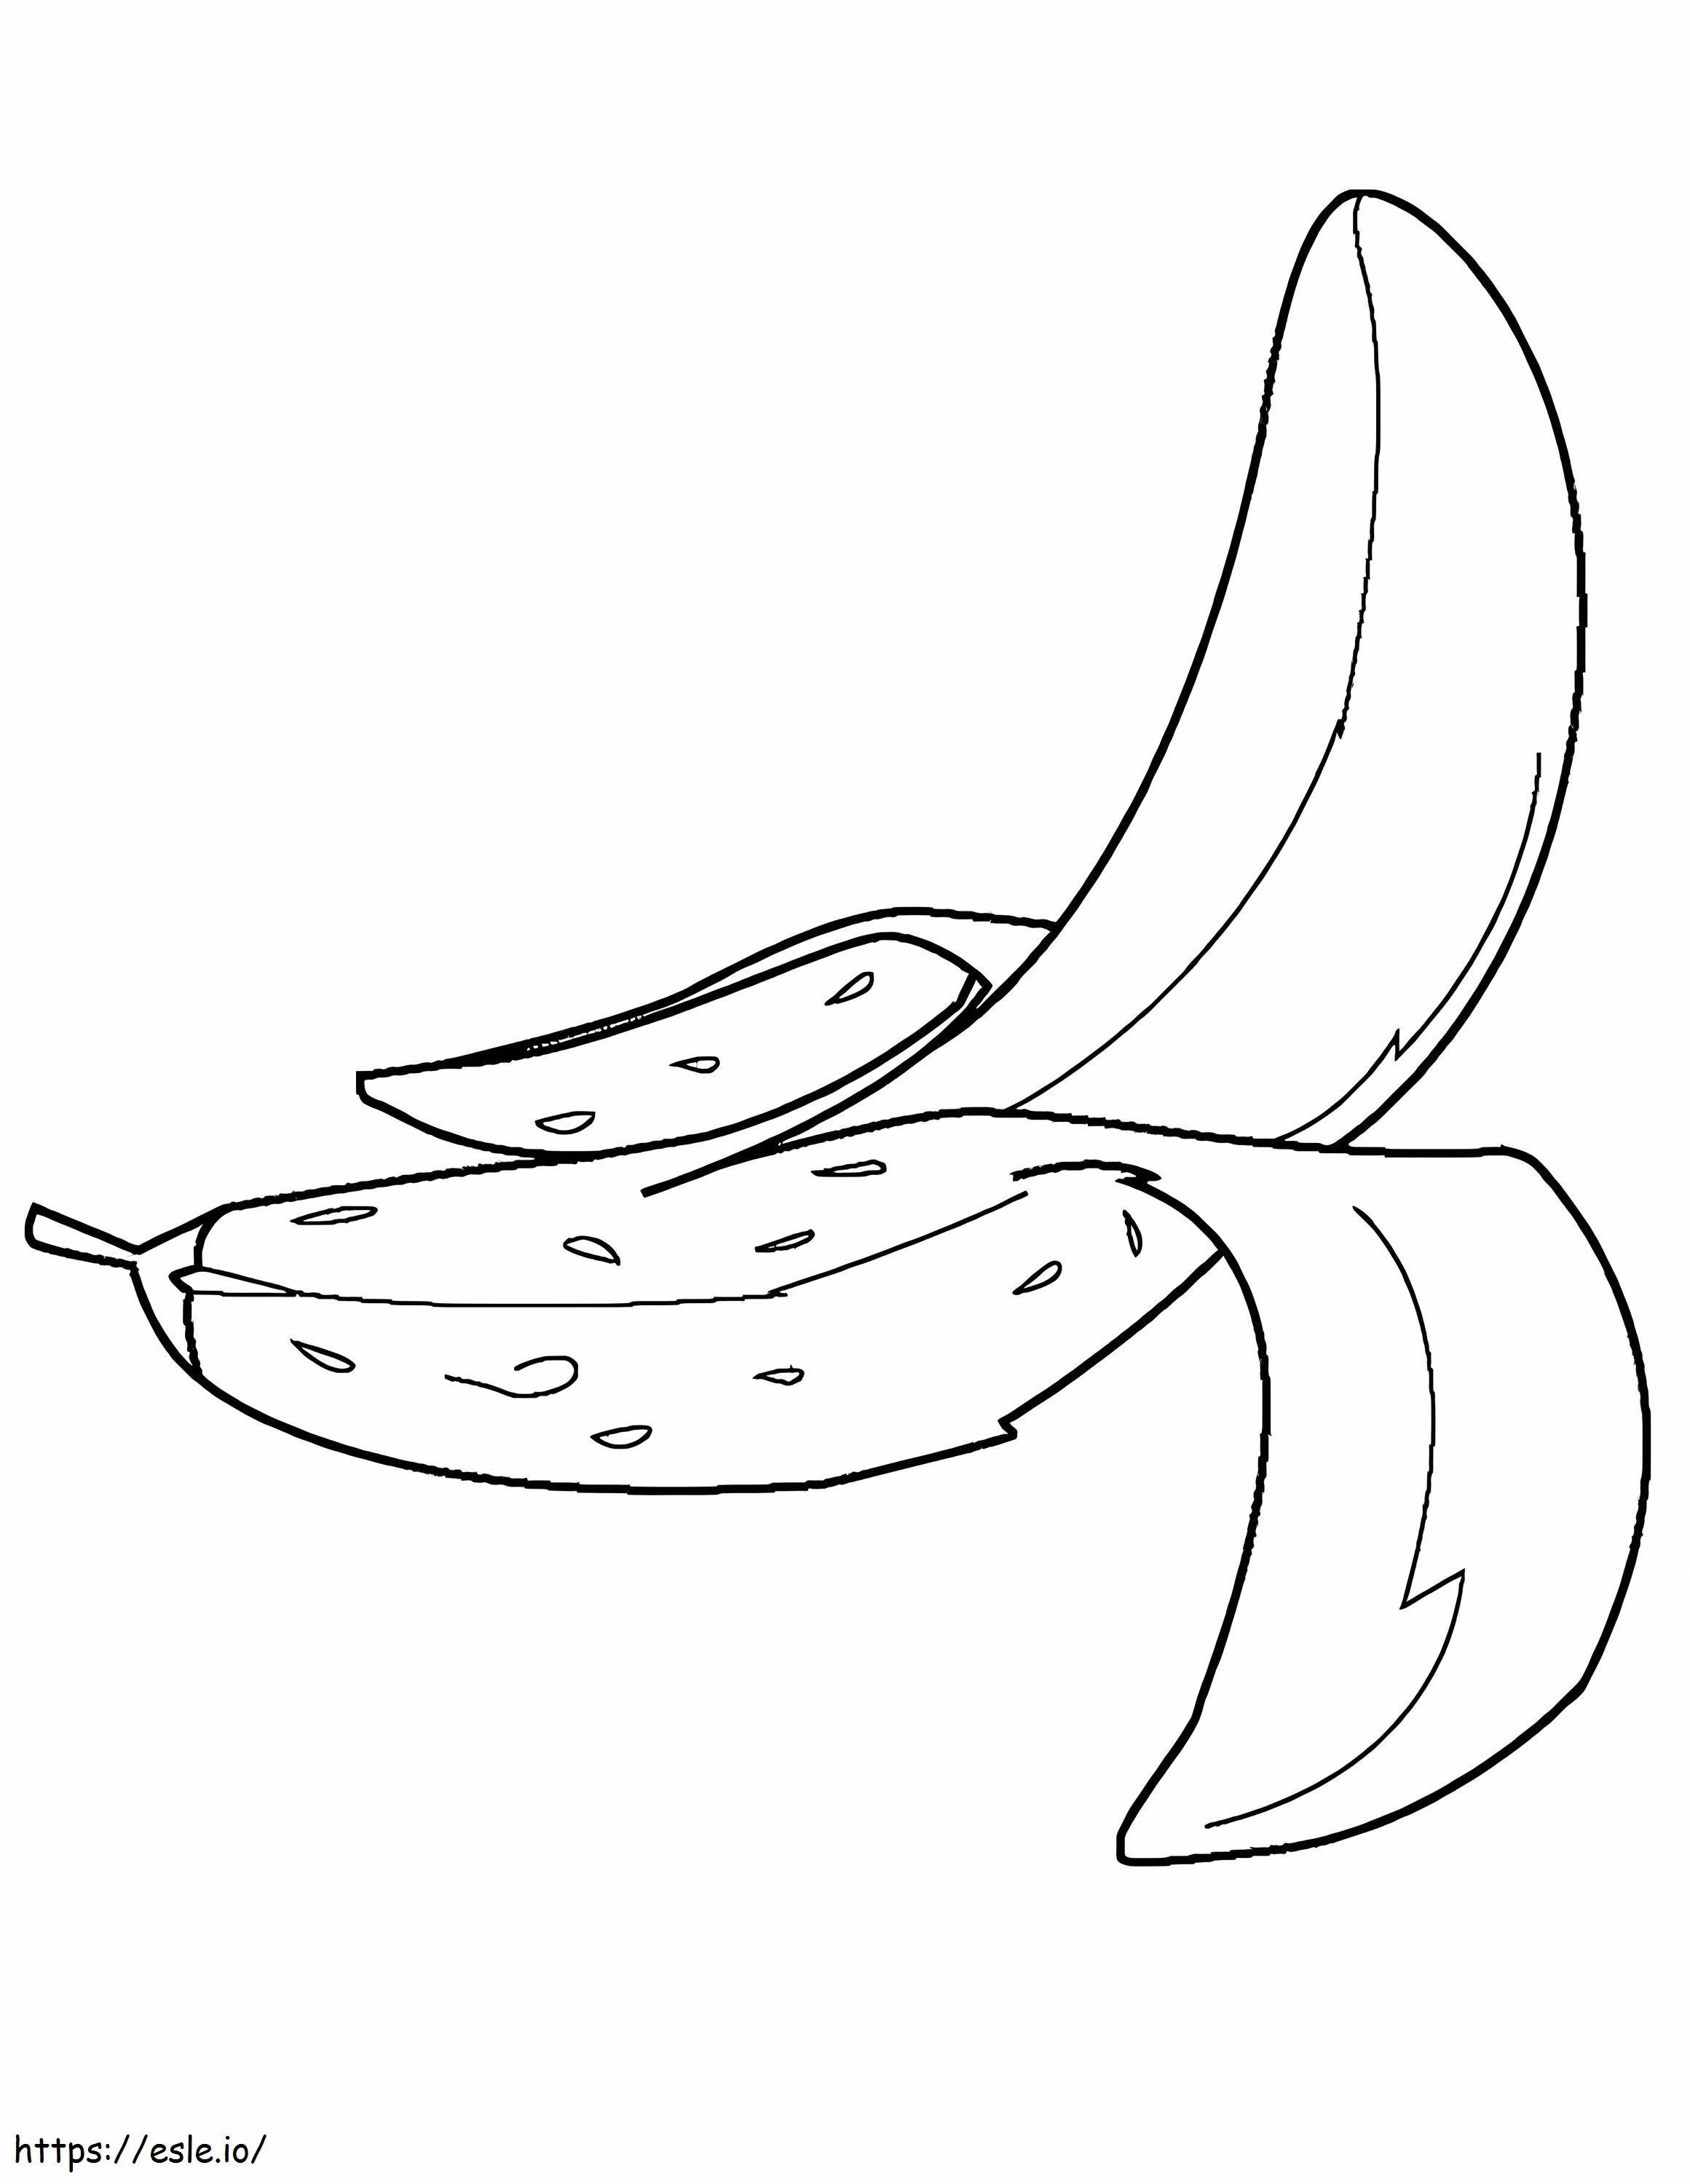 Nice Banana coloring page